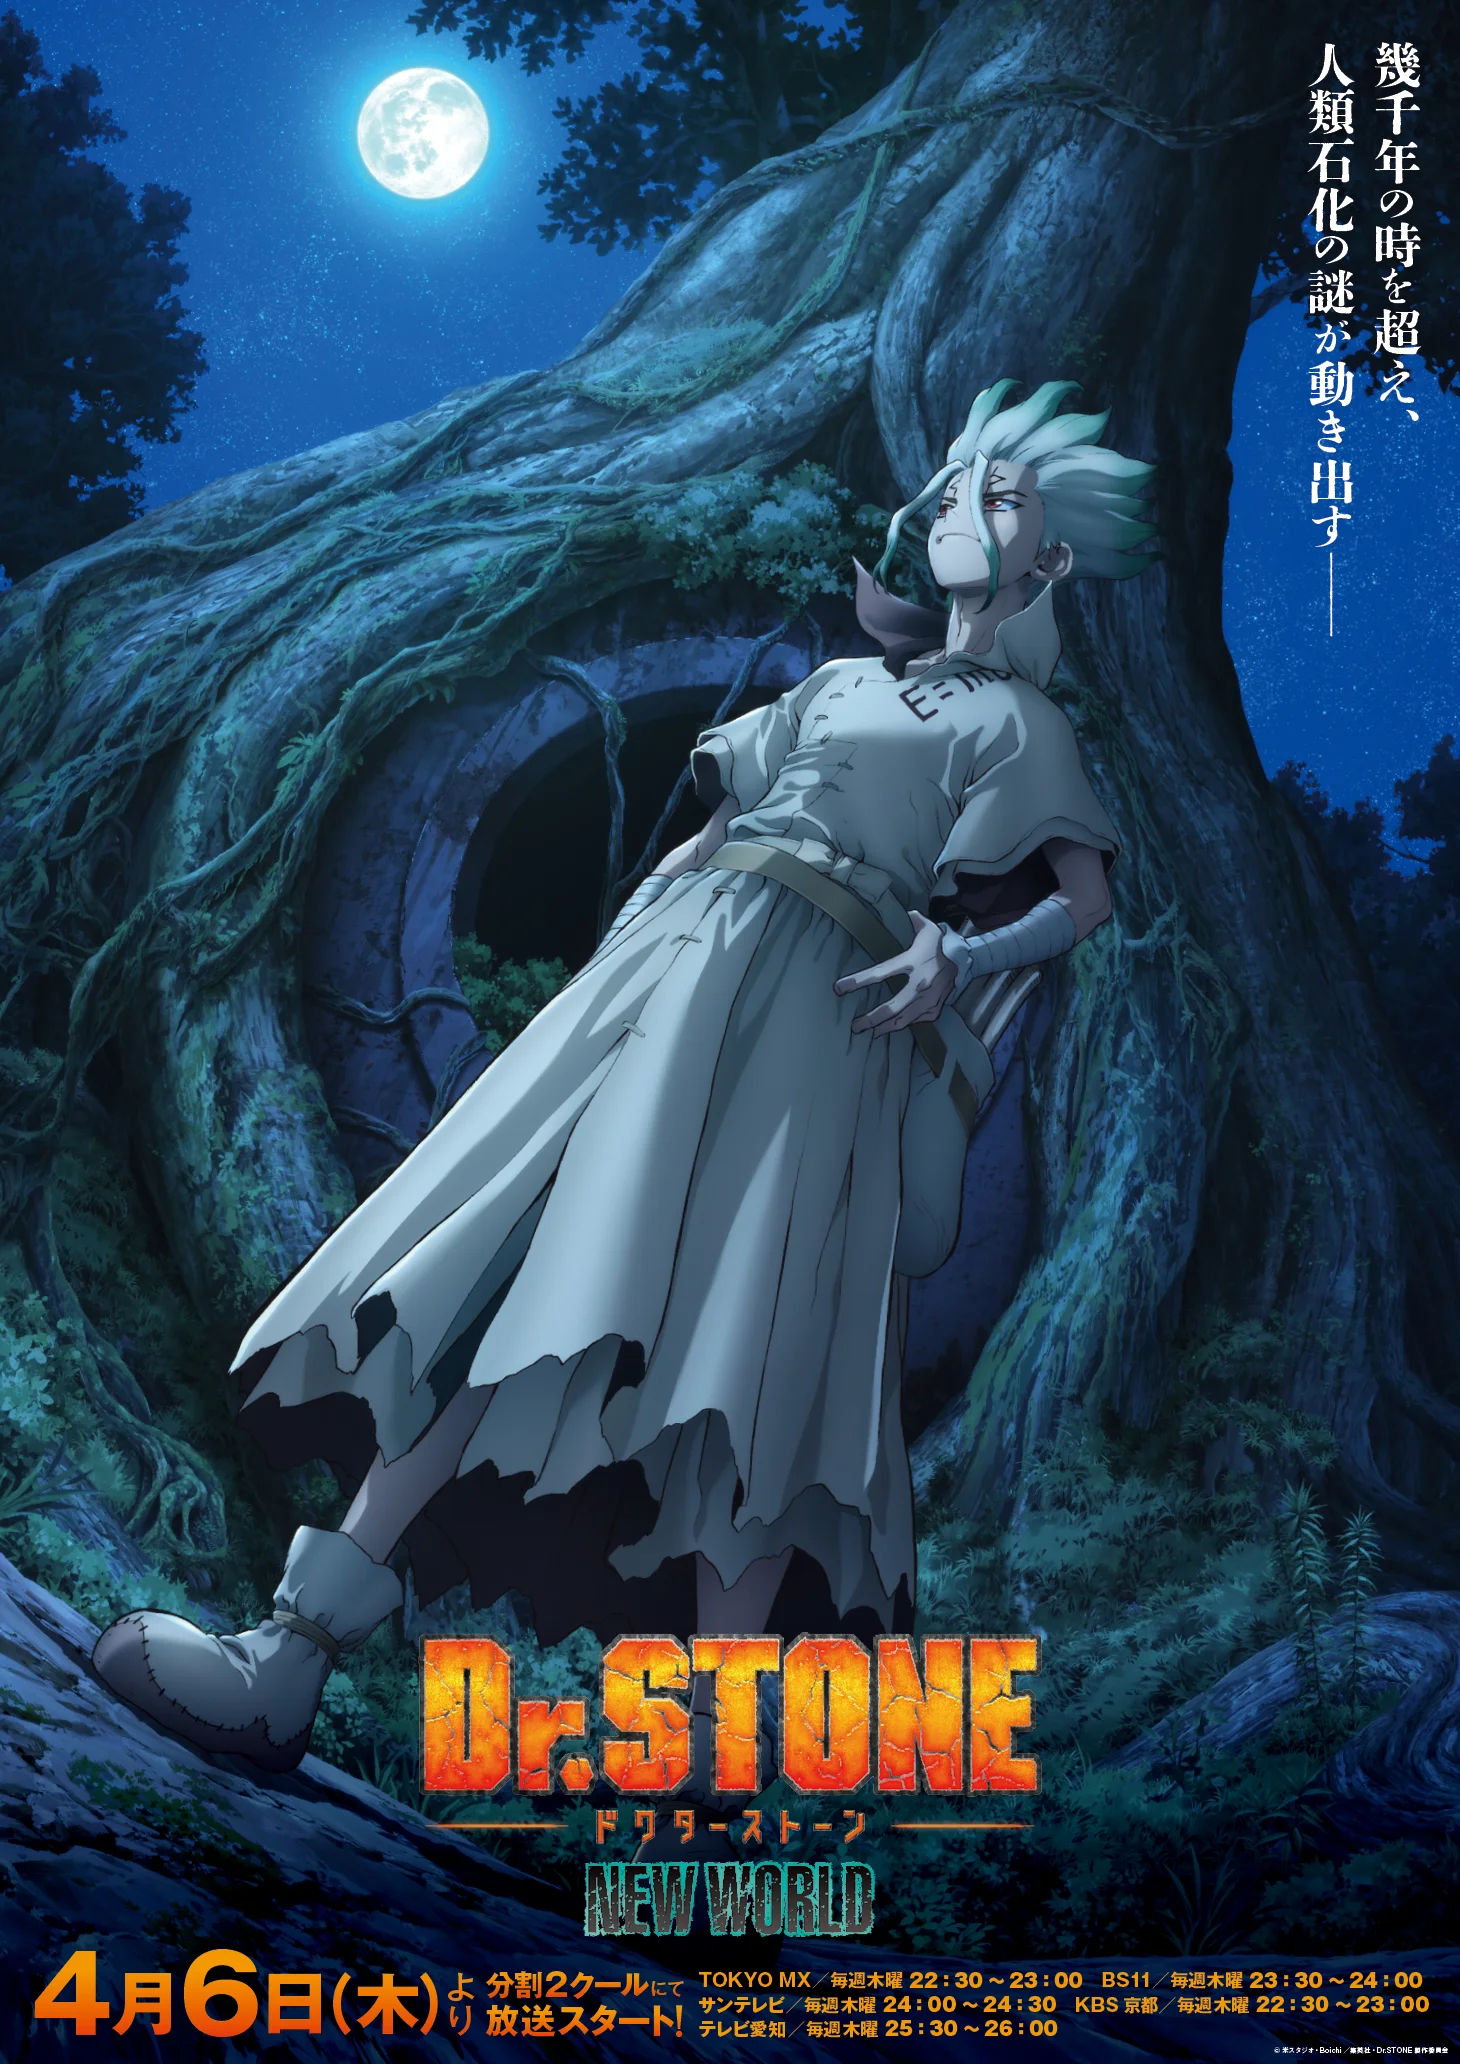 Dr. Stone: Stone Wars - cap 1 Segunda temporada de Dr. Stone - cap 1, Dr.  Stone: Stone Wars - cap 1 Segunda temporada de Dr. Stone - cap 1, By La  Cafetería del Anime